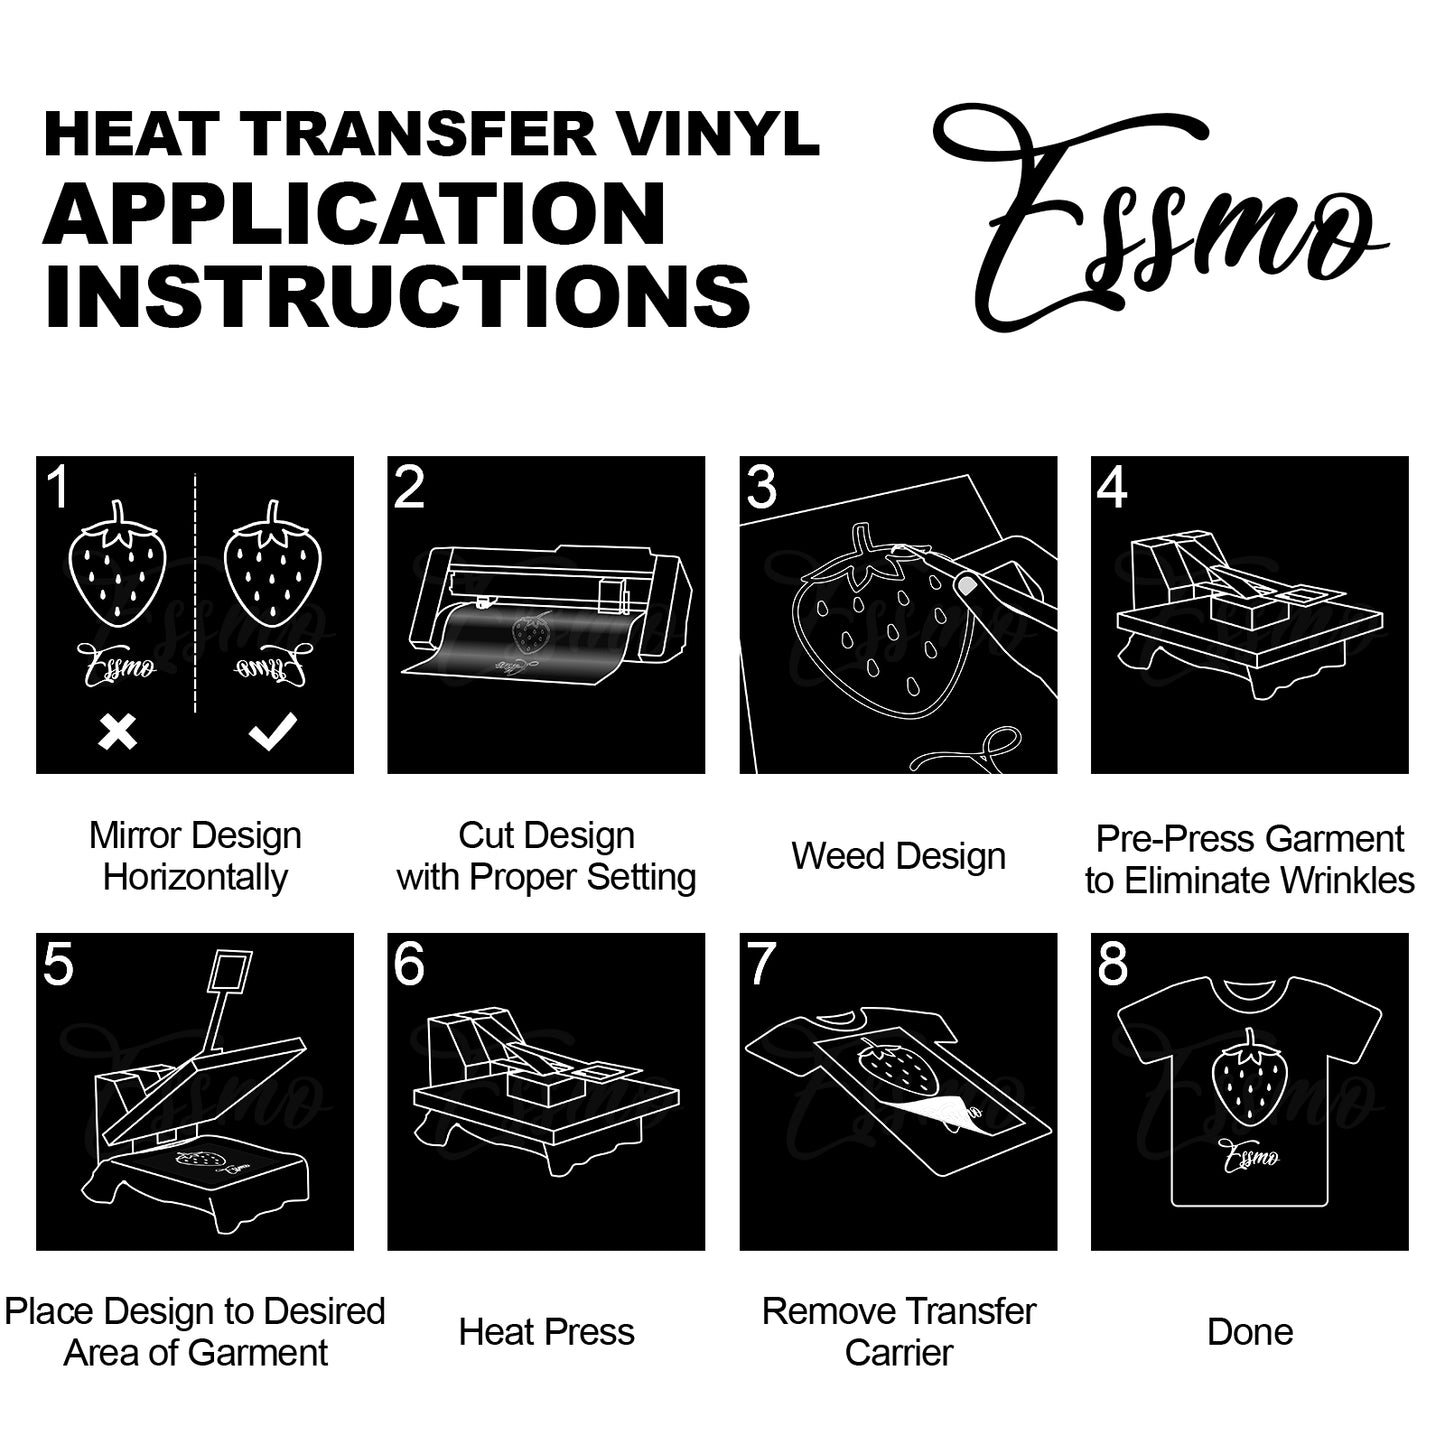 ESSMO™ Holographic Rainbow Pattern Heat Transfer Vinyl HTV SP14